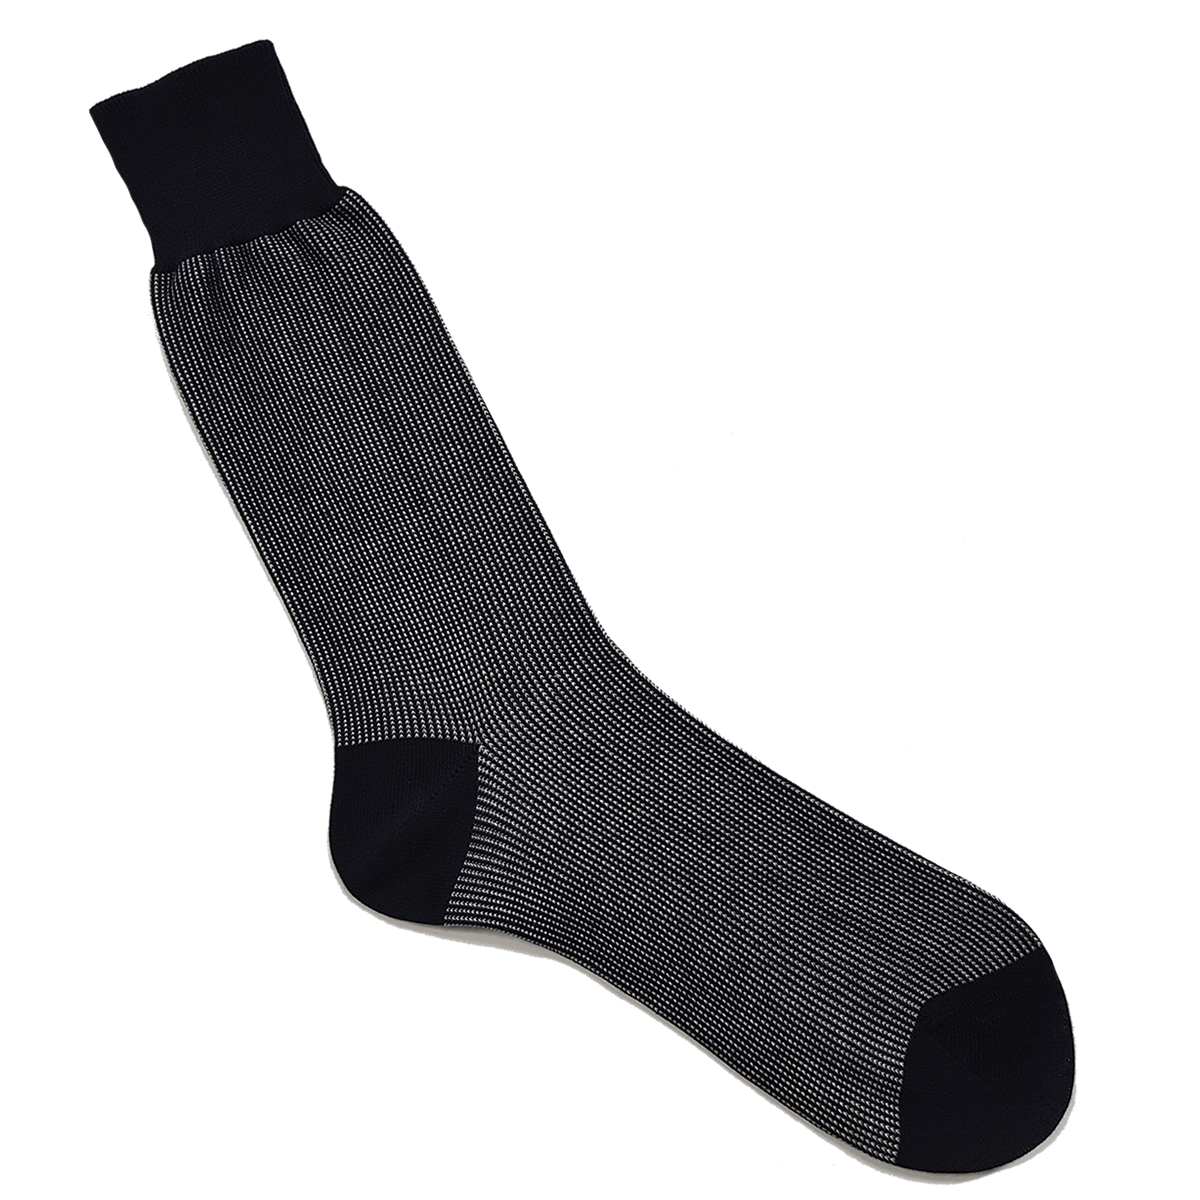 Black White Vertical Striped Mid Calf Cotton Socks